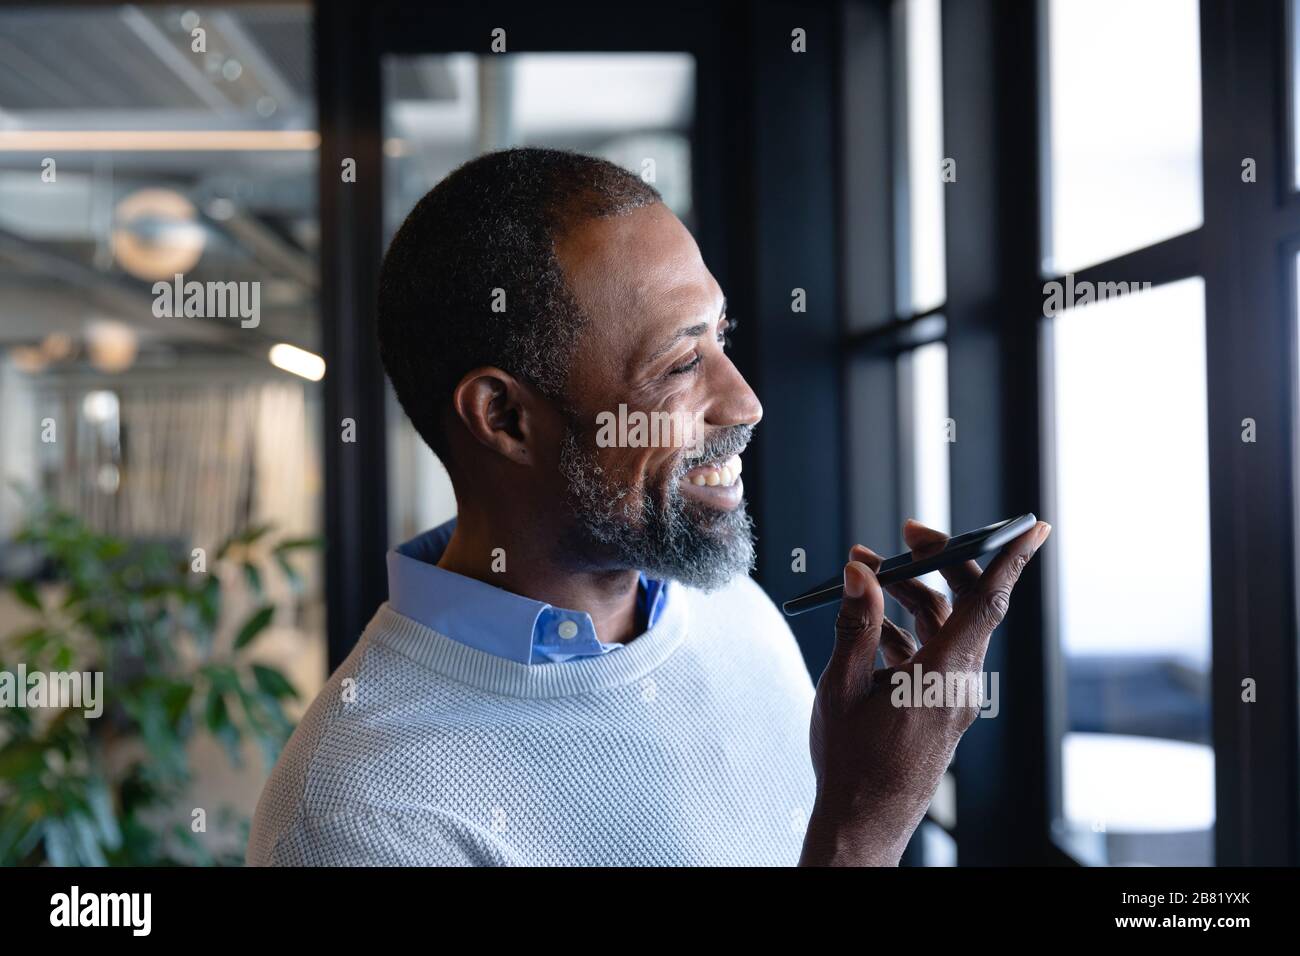 African American man having a phone call Stock Photo